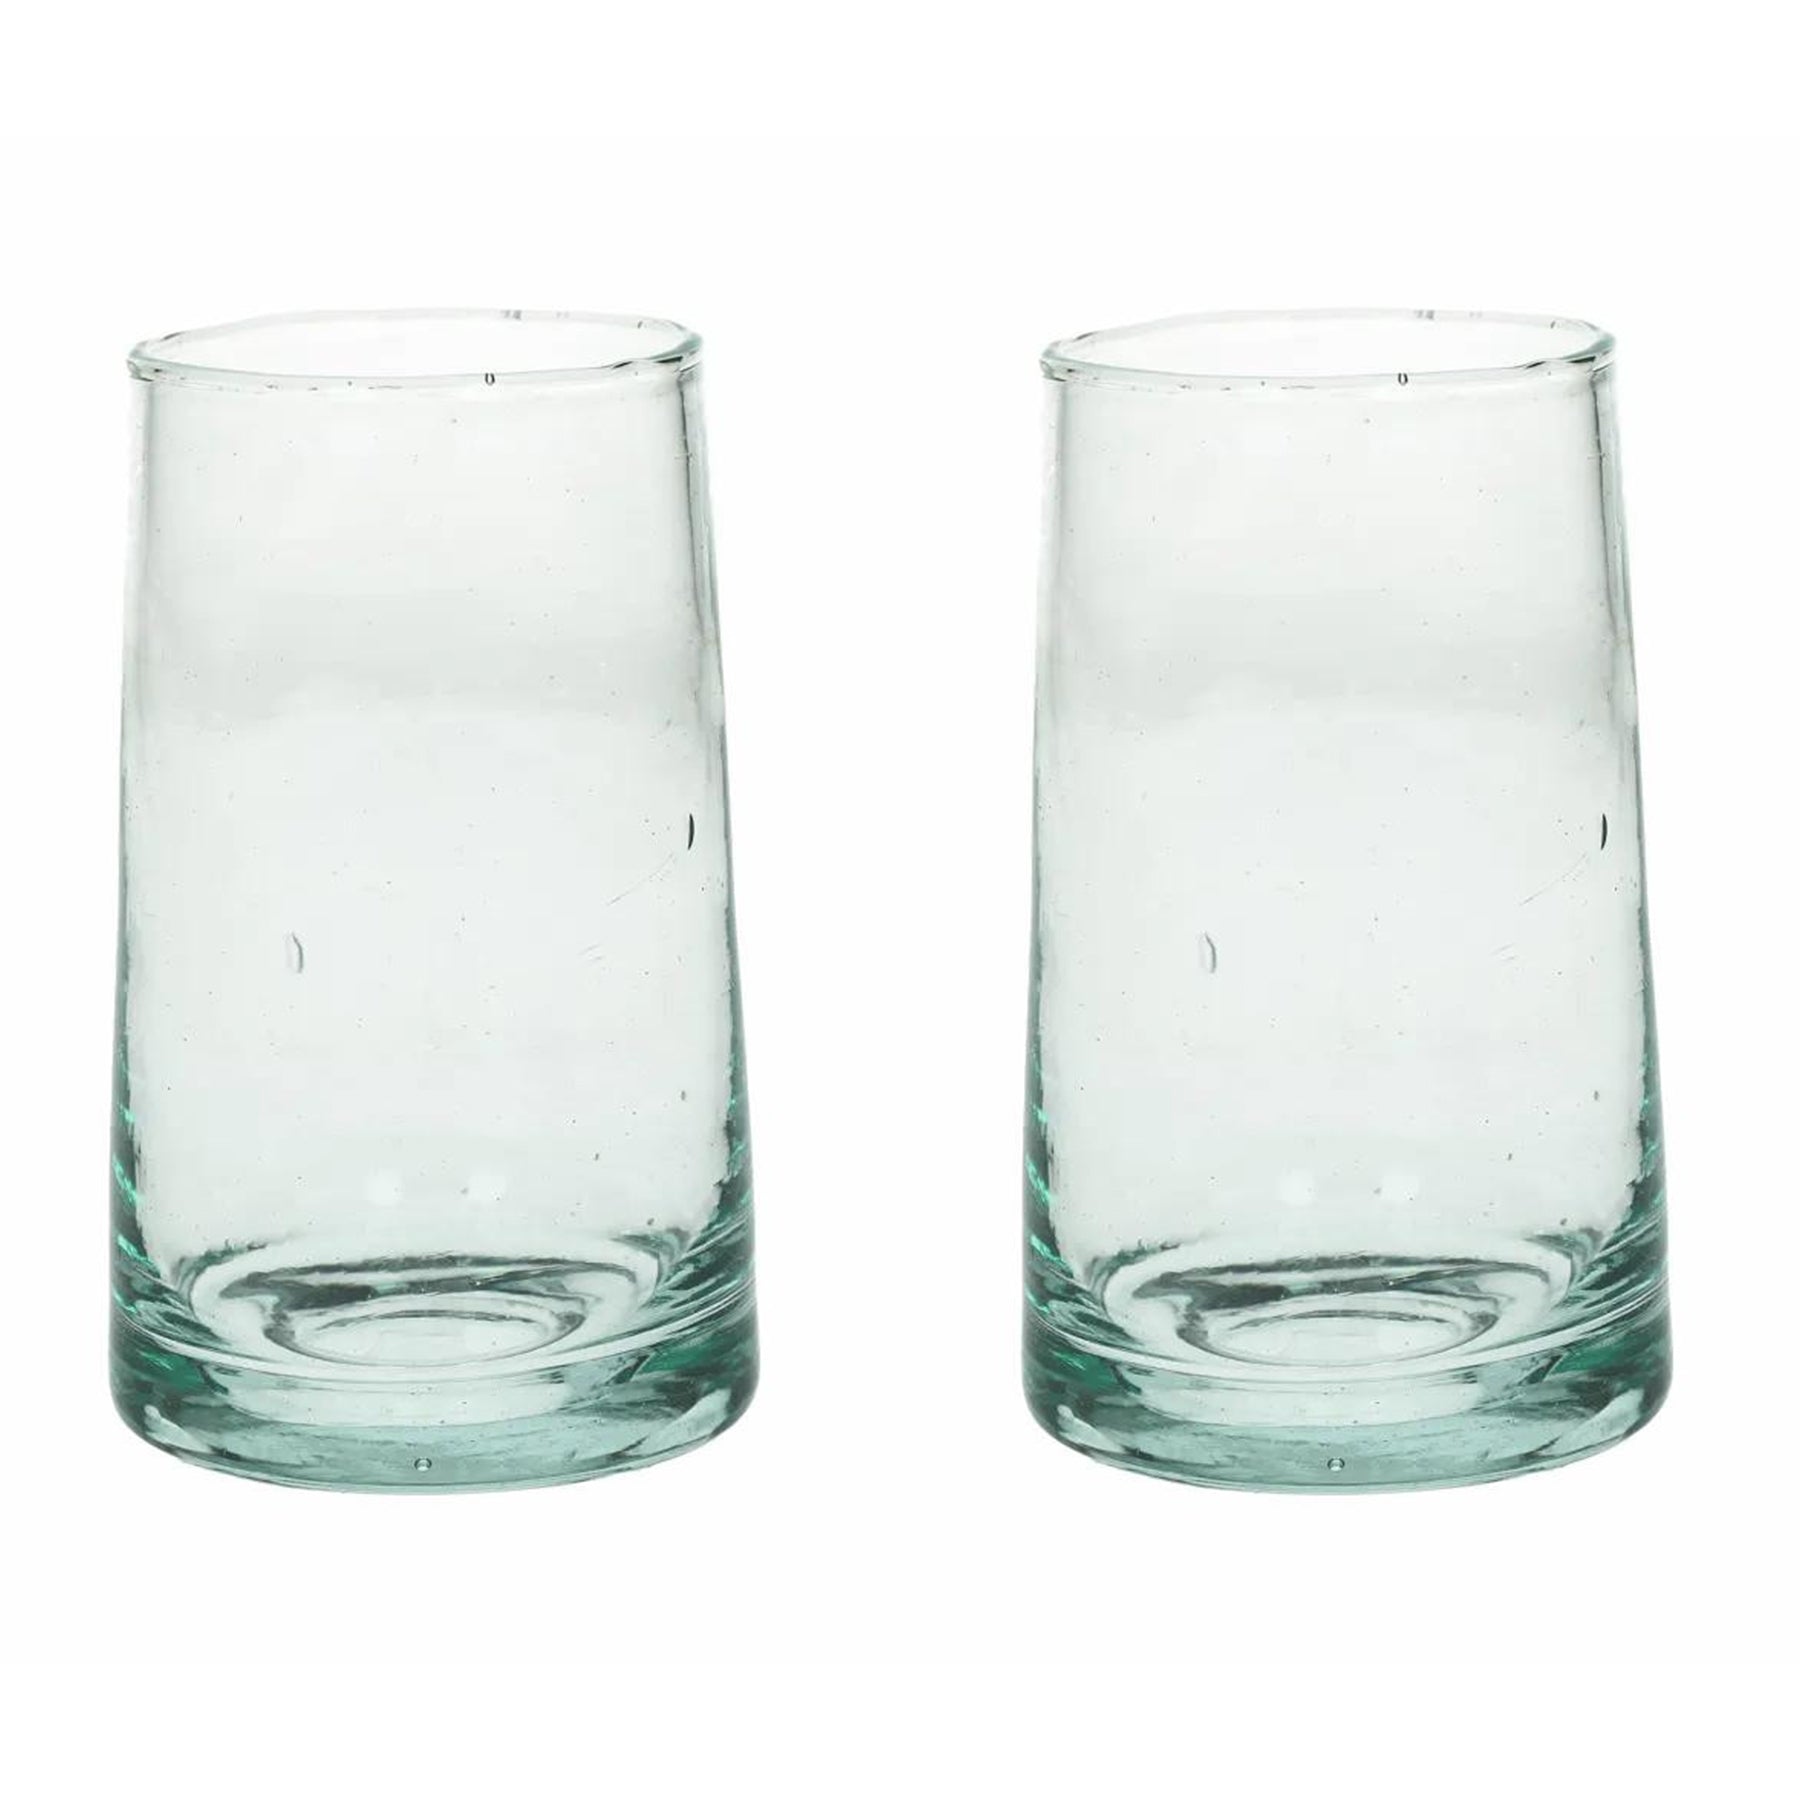 Set of 6 MIRA Long Water Glass 6x12cm, Clear Color -  مجموعة من 6 قطع كوب ماء زجاجي طويل MIRA 6x12cm, لون شفاف